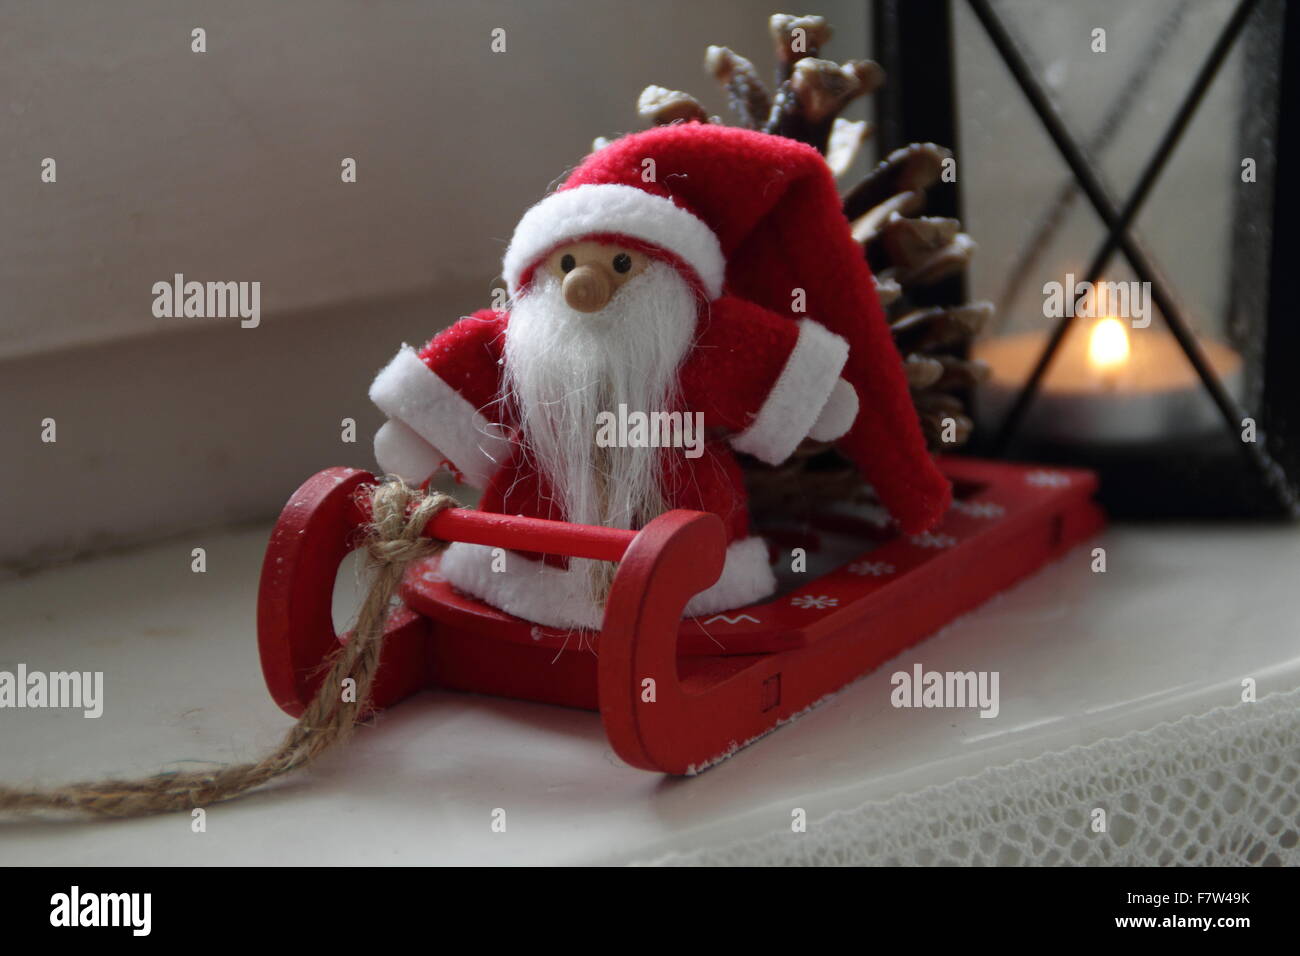 Santa Claus in the window Stock Photo